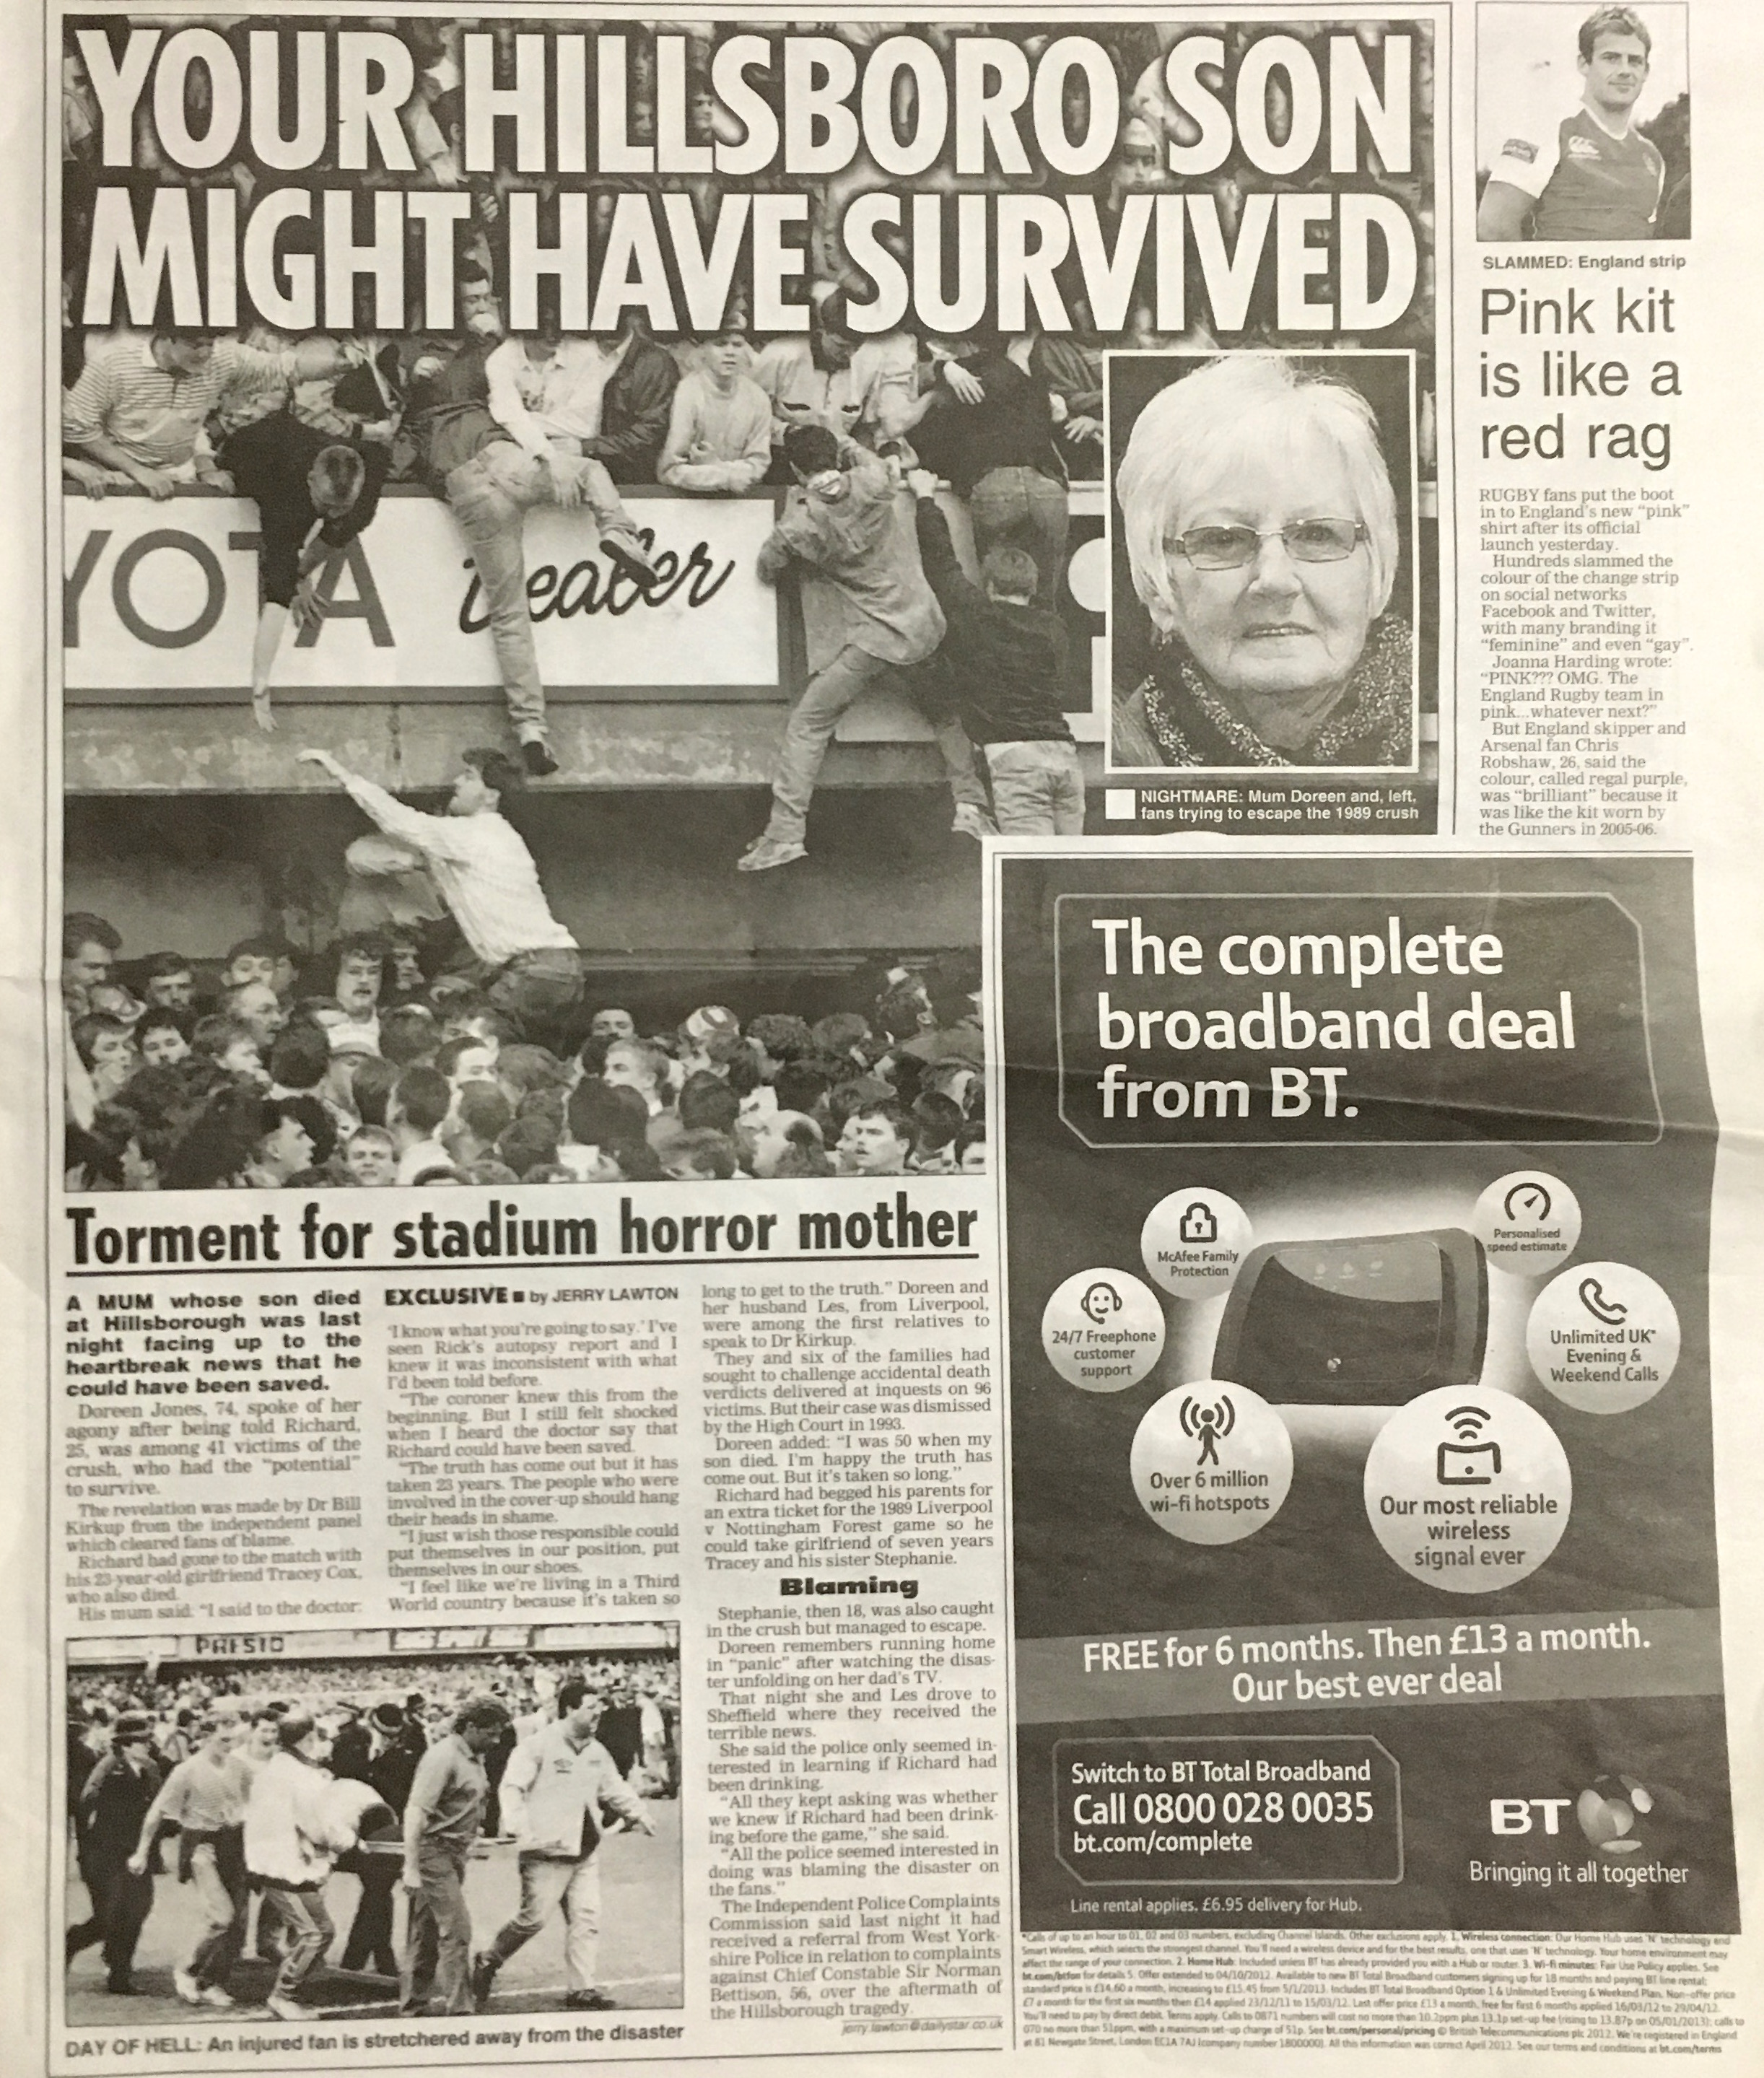 Daily Star: Hillsborough torment